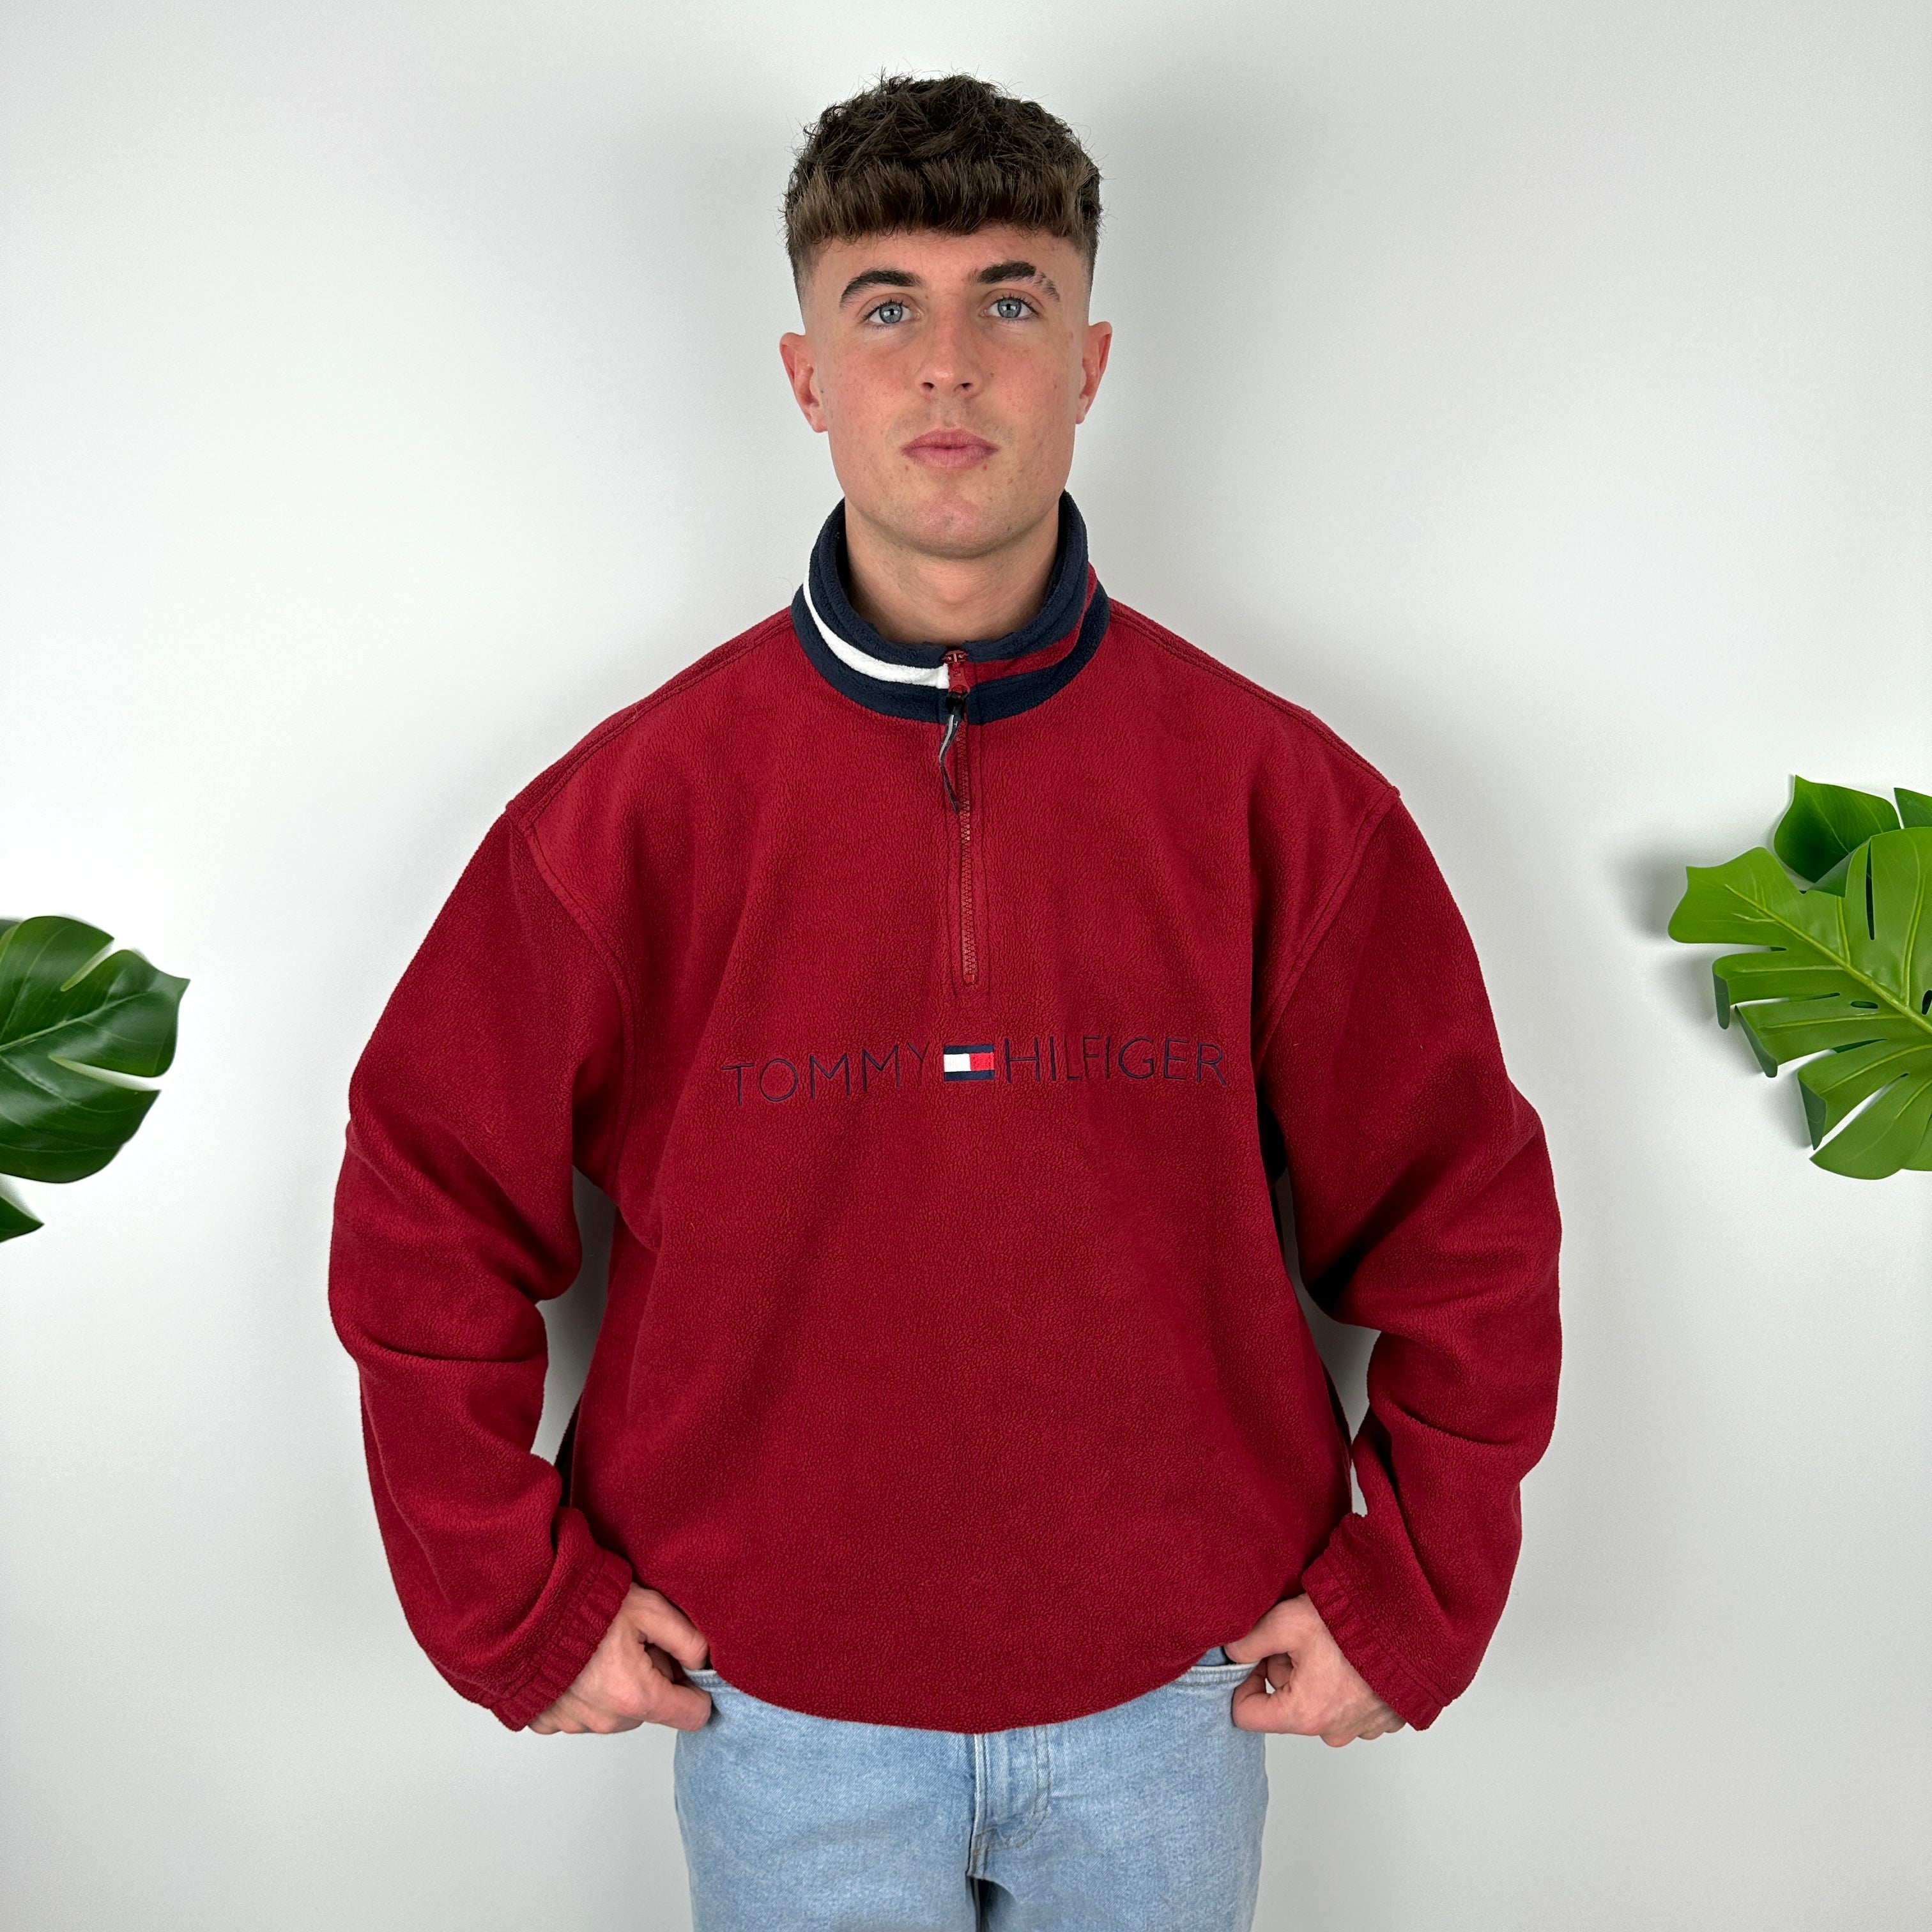 Tommy Hilfiger Red Embroidered Spell Out Teddy Bear Fleece Quarter Zip Sweatshirt (XL)